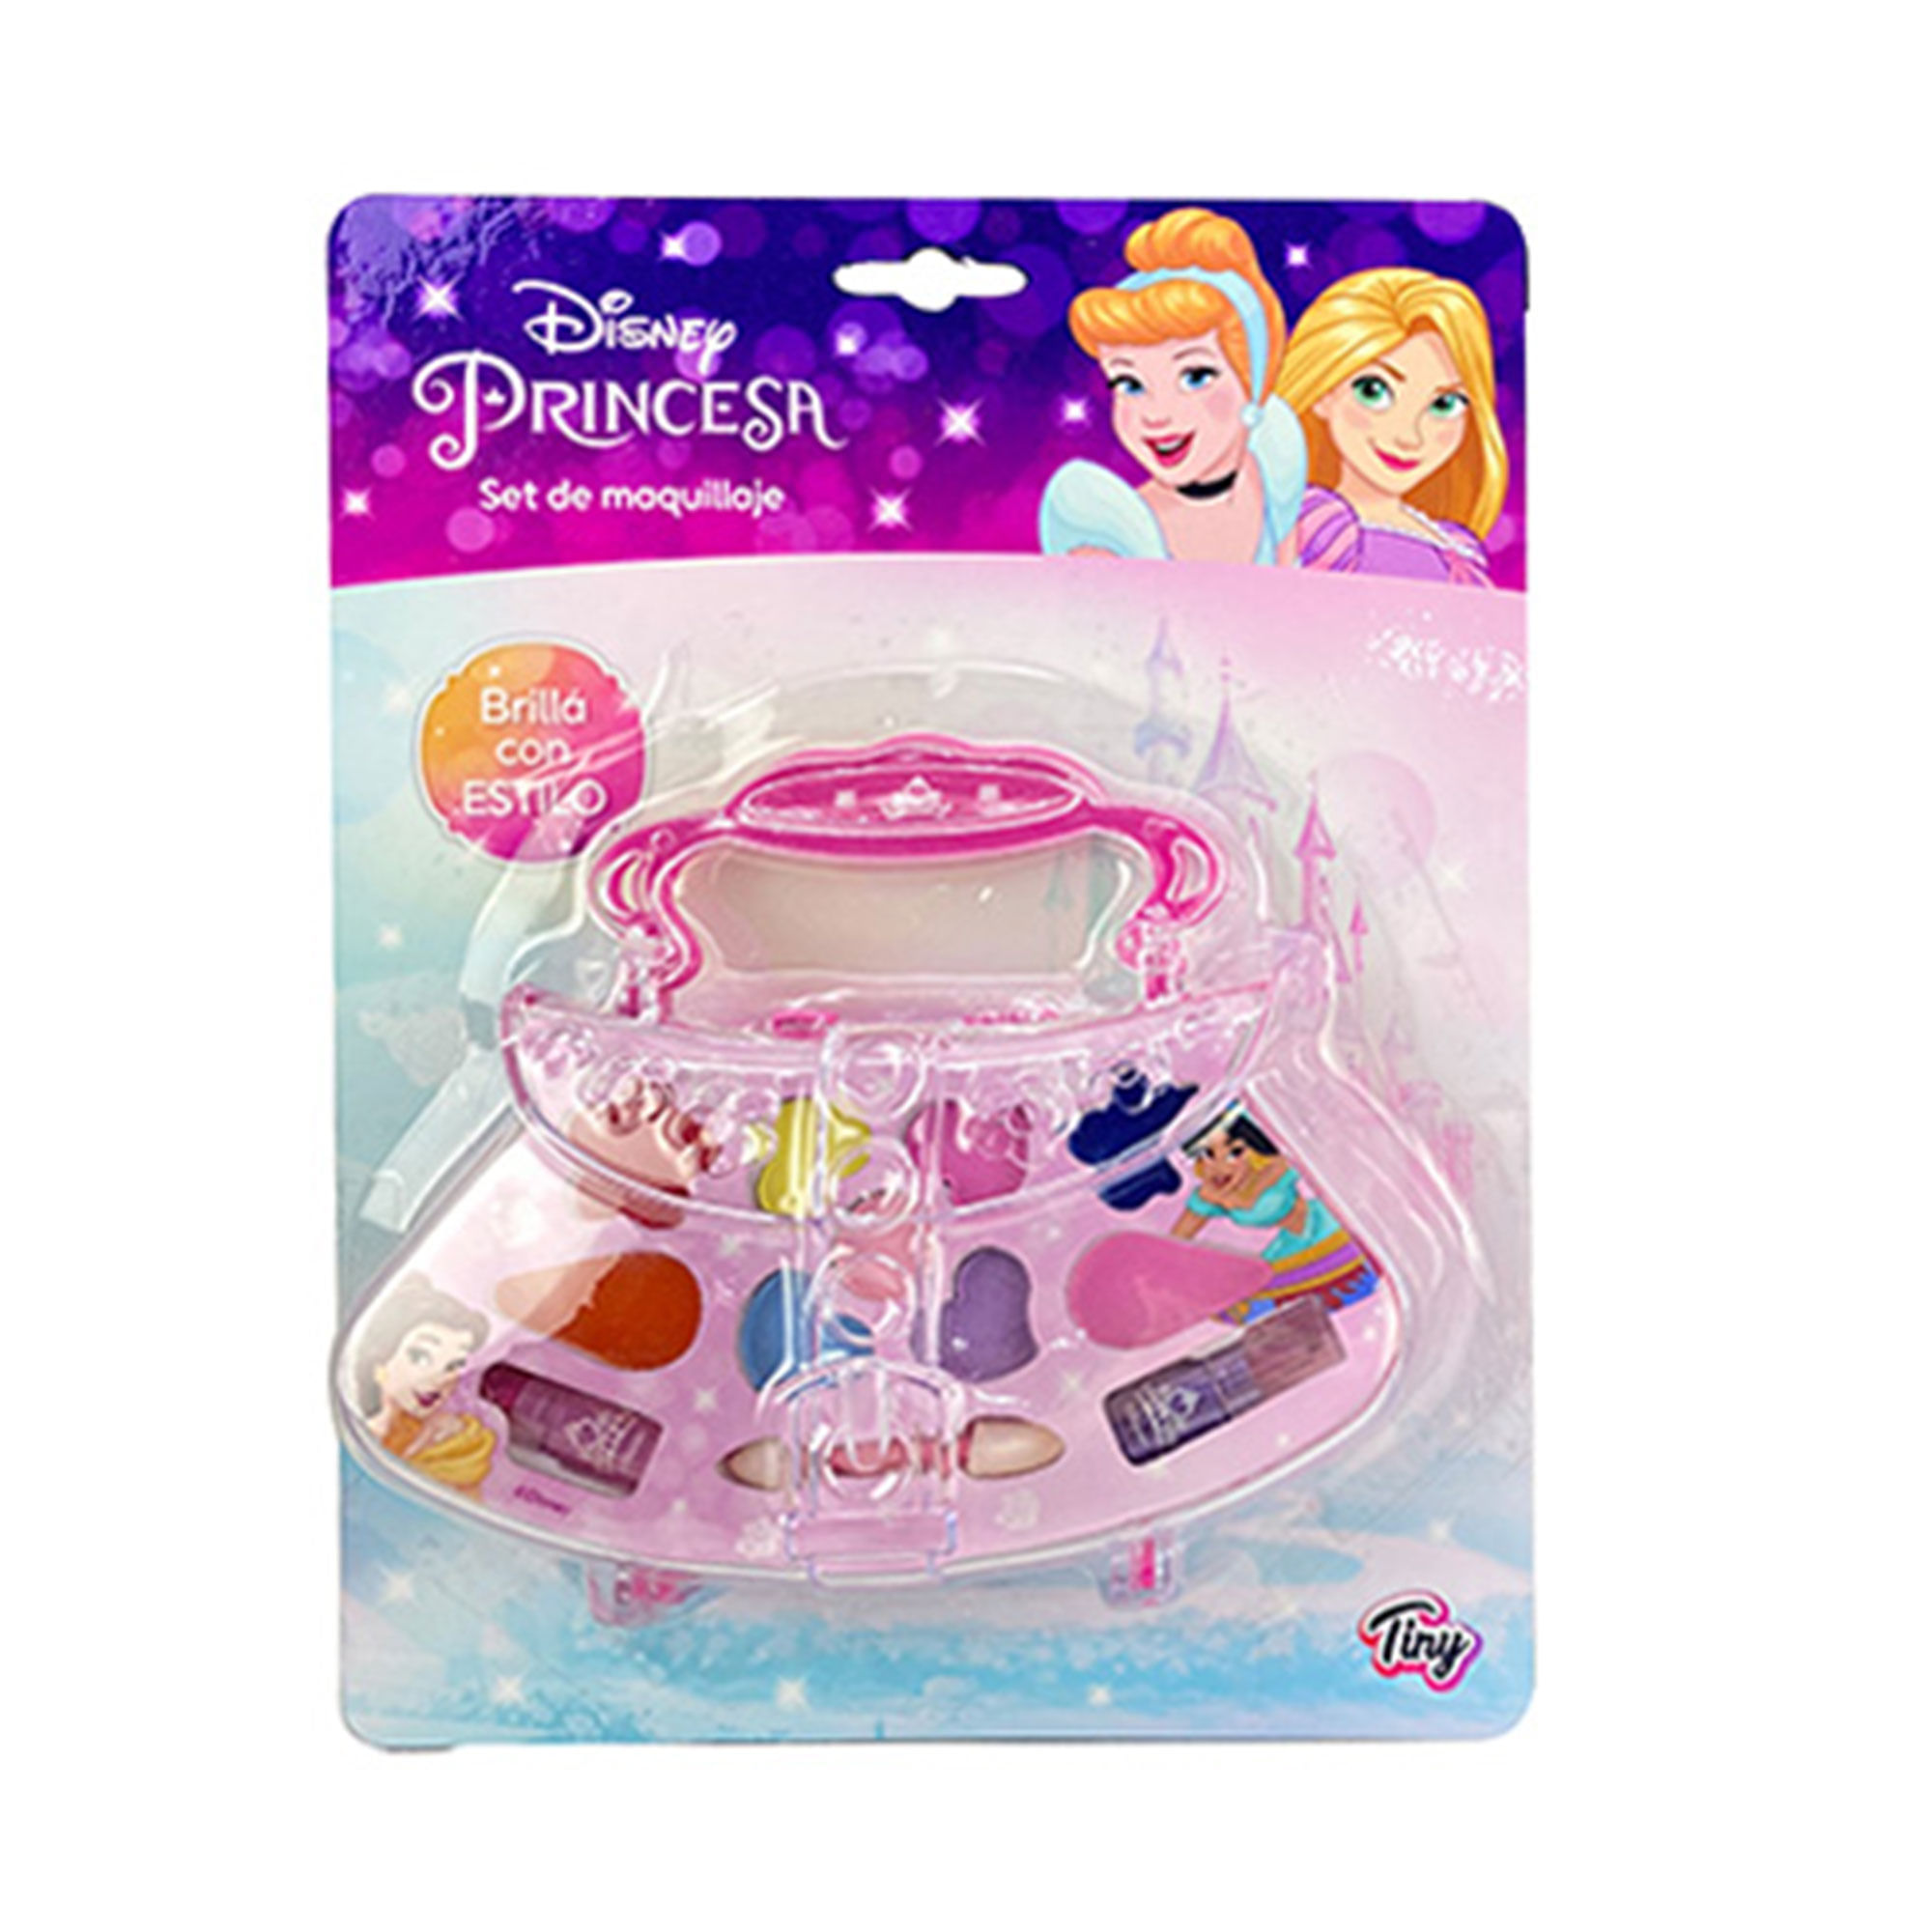 Set de maquillaje princesas - Carrefour